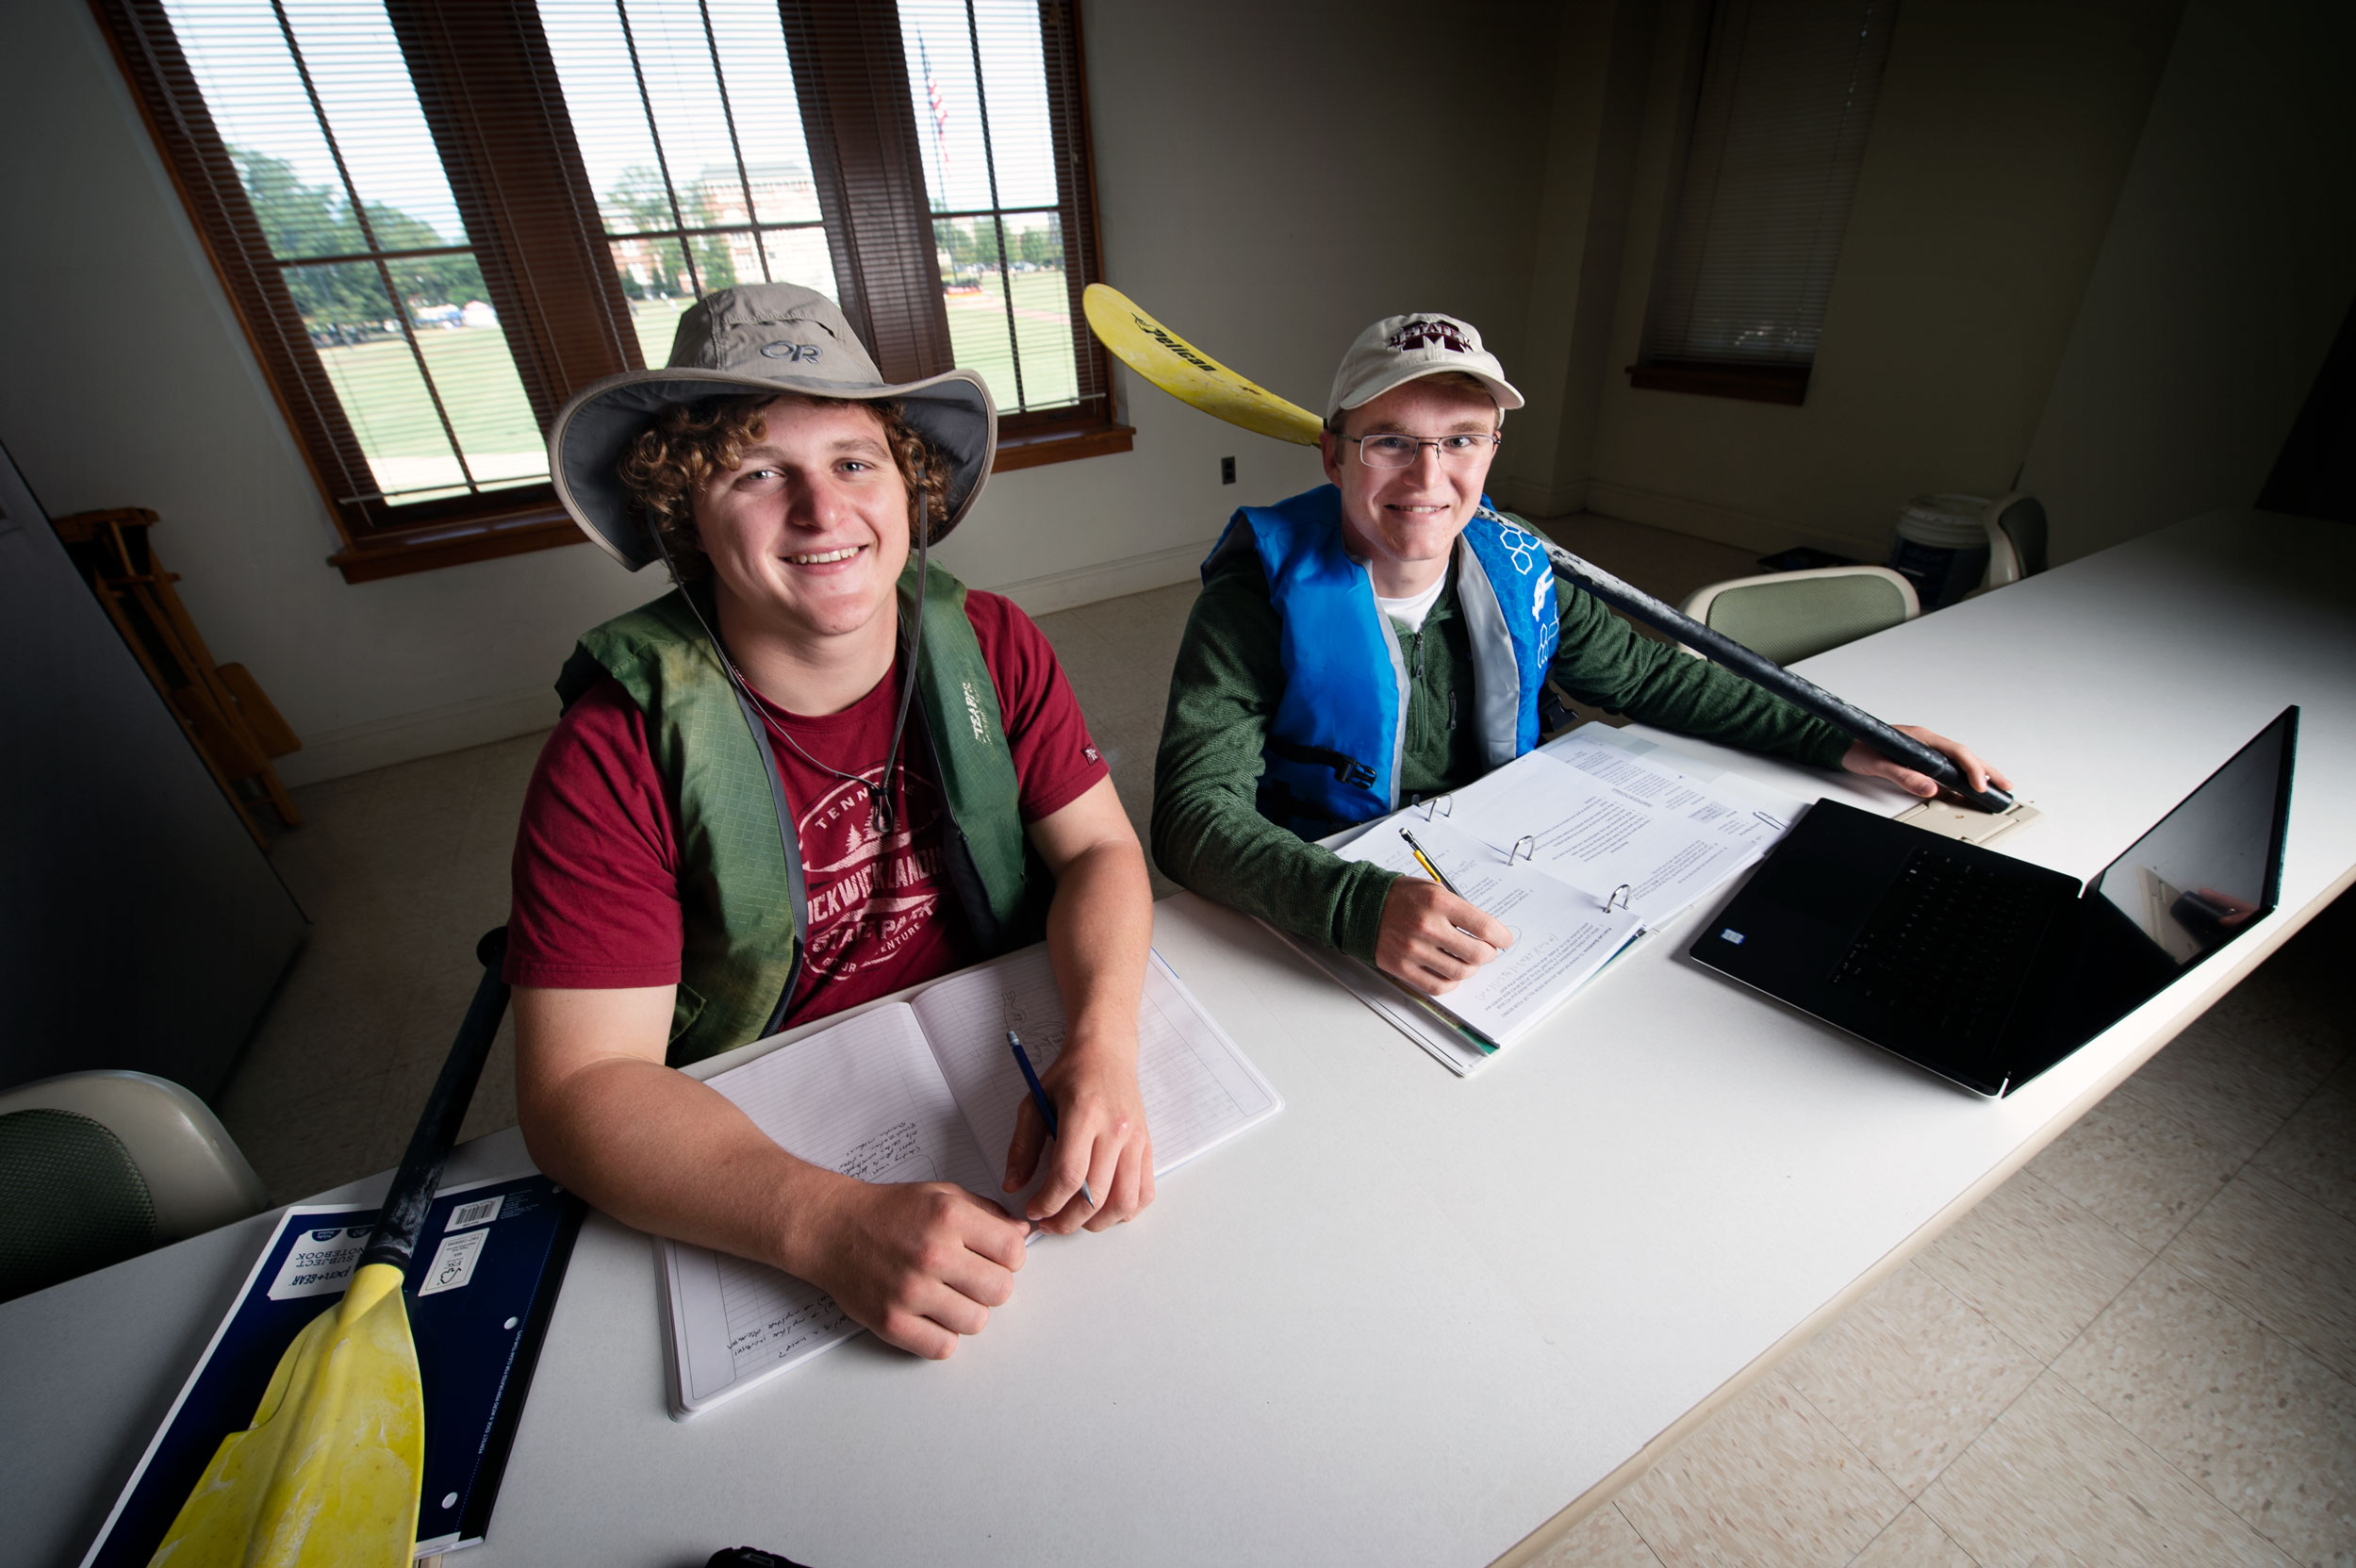 Jonah Albert and Luke Saulters, pictured in an MSU classroom wearing canoe gear.